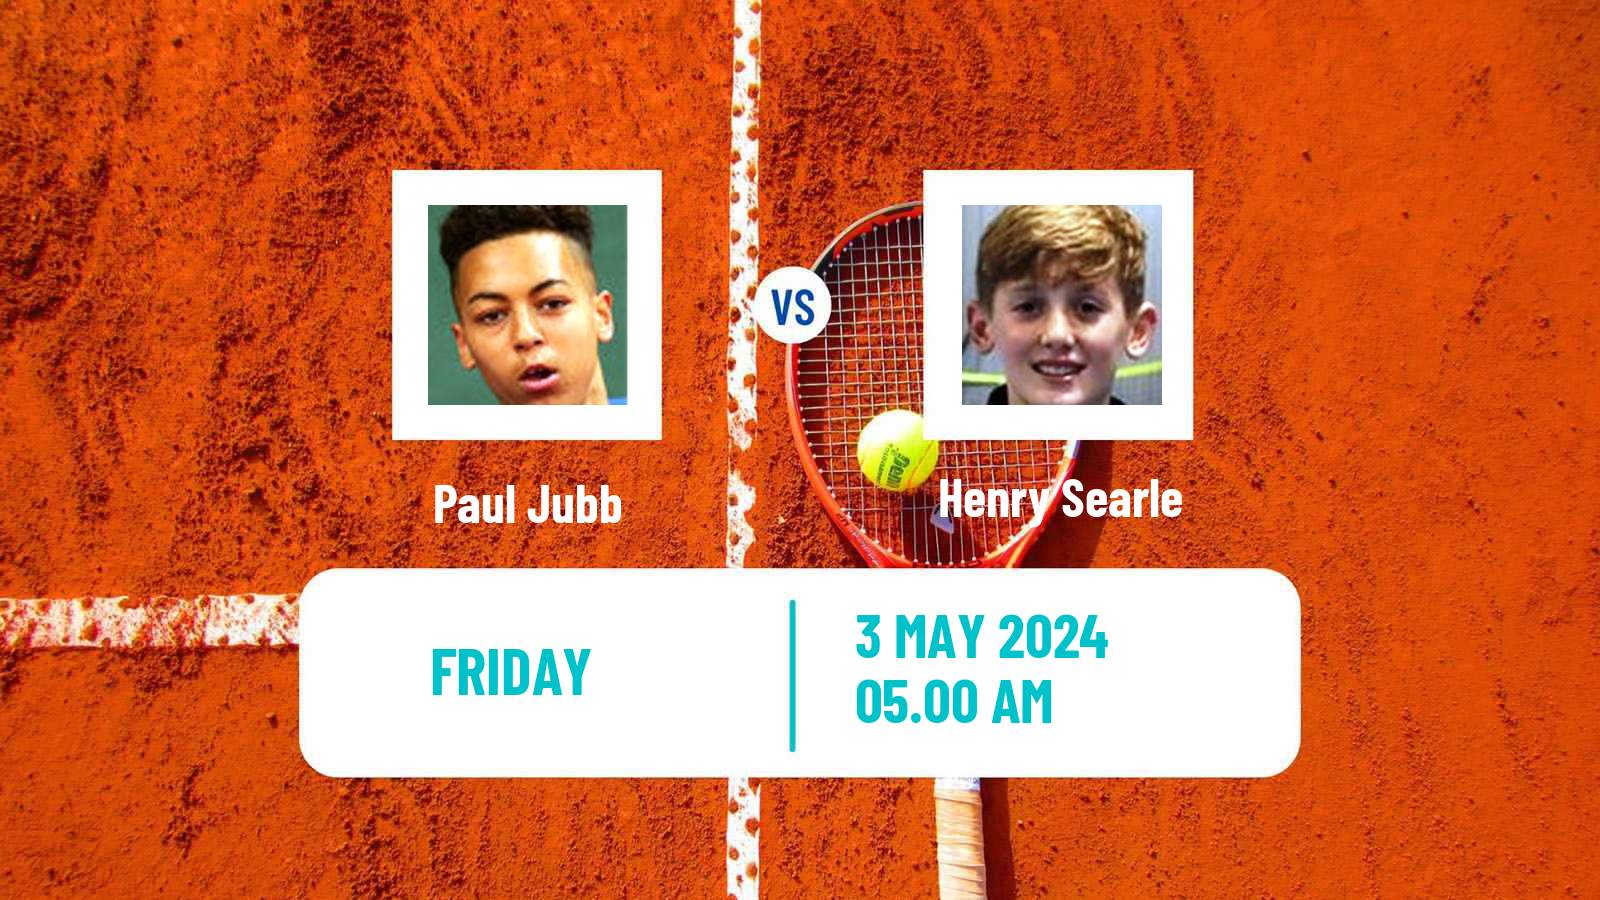 Tennis ITF M25 Nottingham 2 Men Paul Jubb - Henry Searle